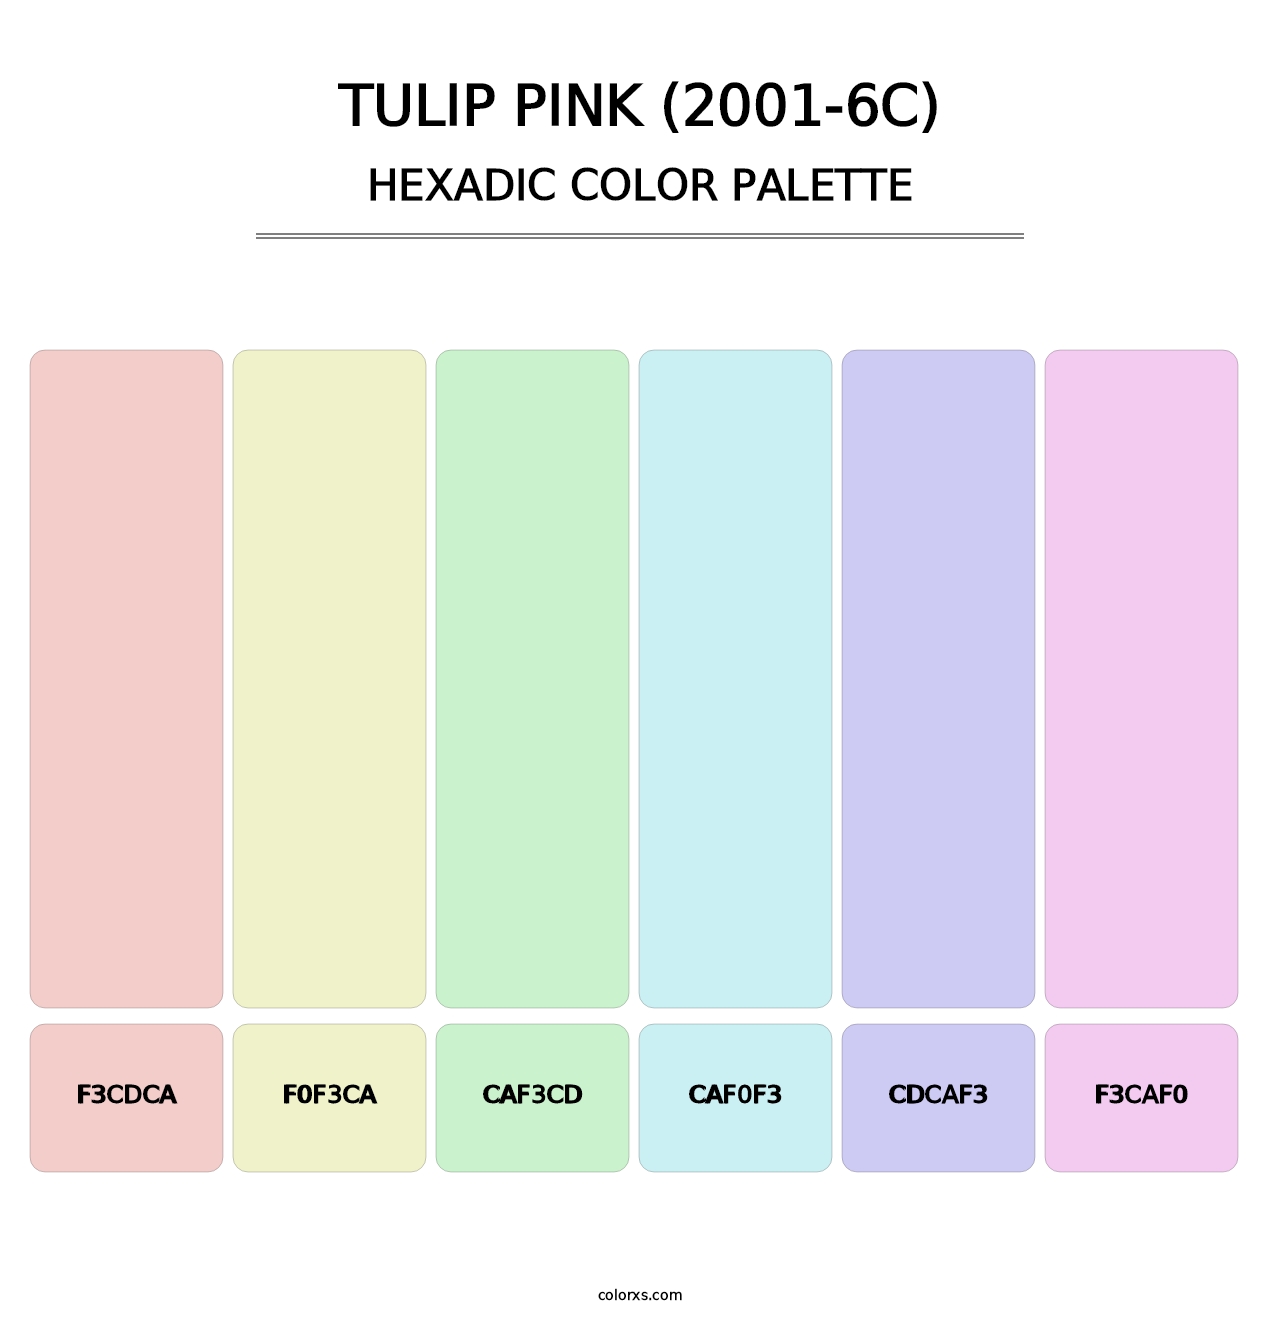 Tulip Pink (2001-6C) - Hexadic Color Palette